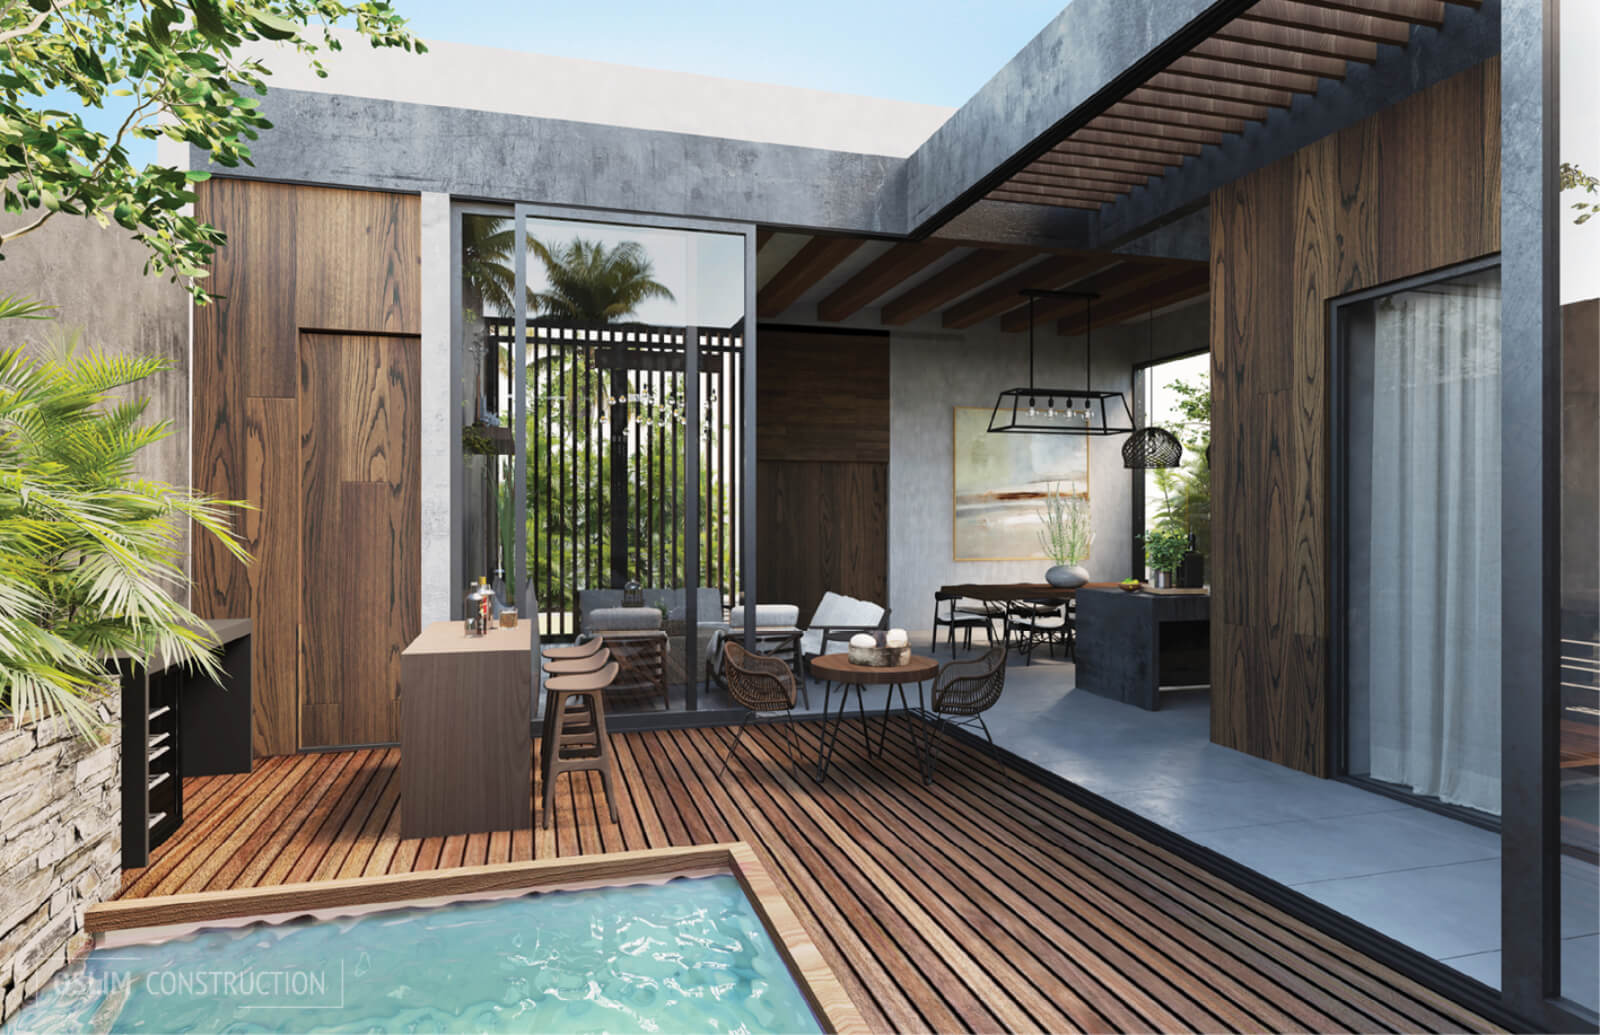 Outdoor lifestyle, 2 terraces, private pool, luxury finishes, private bedroom, pre-construction for sale Aldea Zama, Tulum.